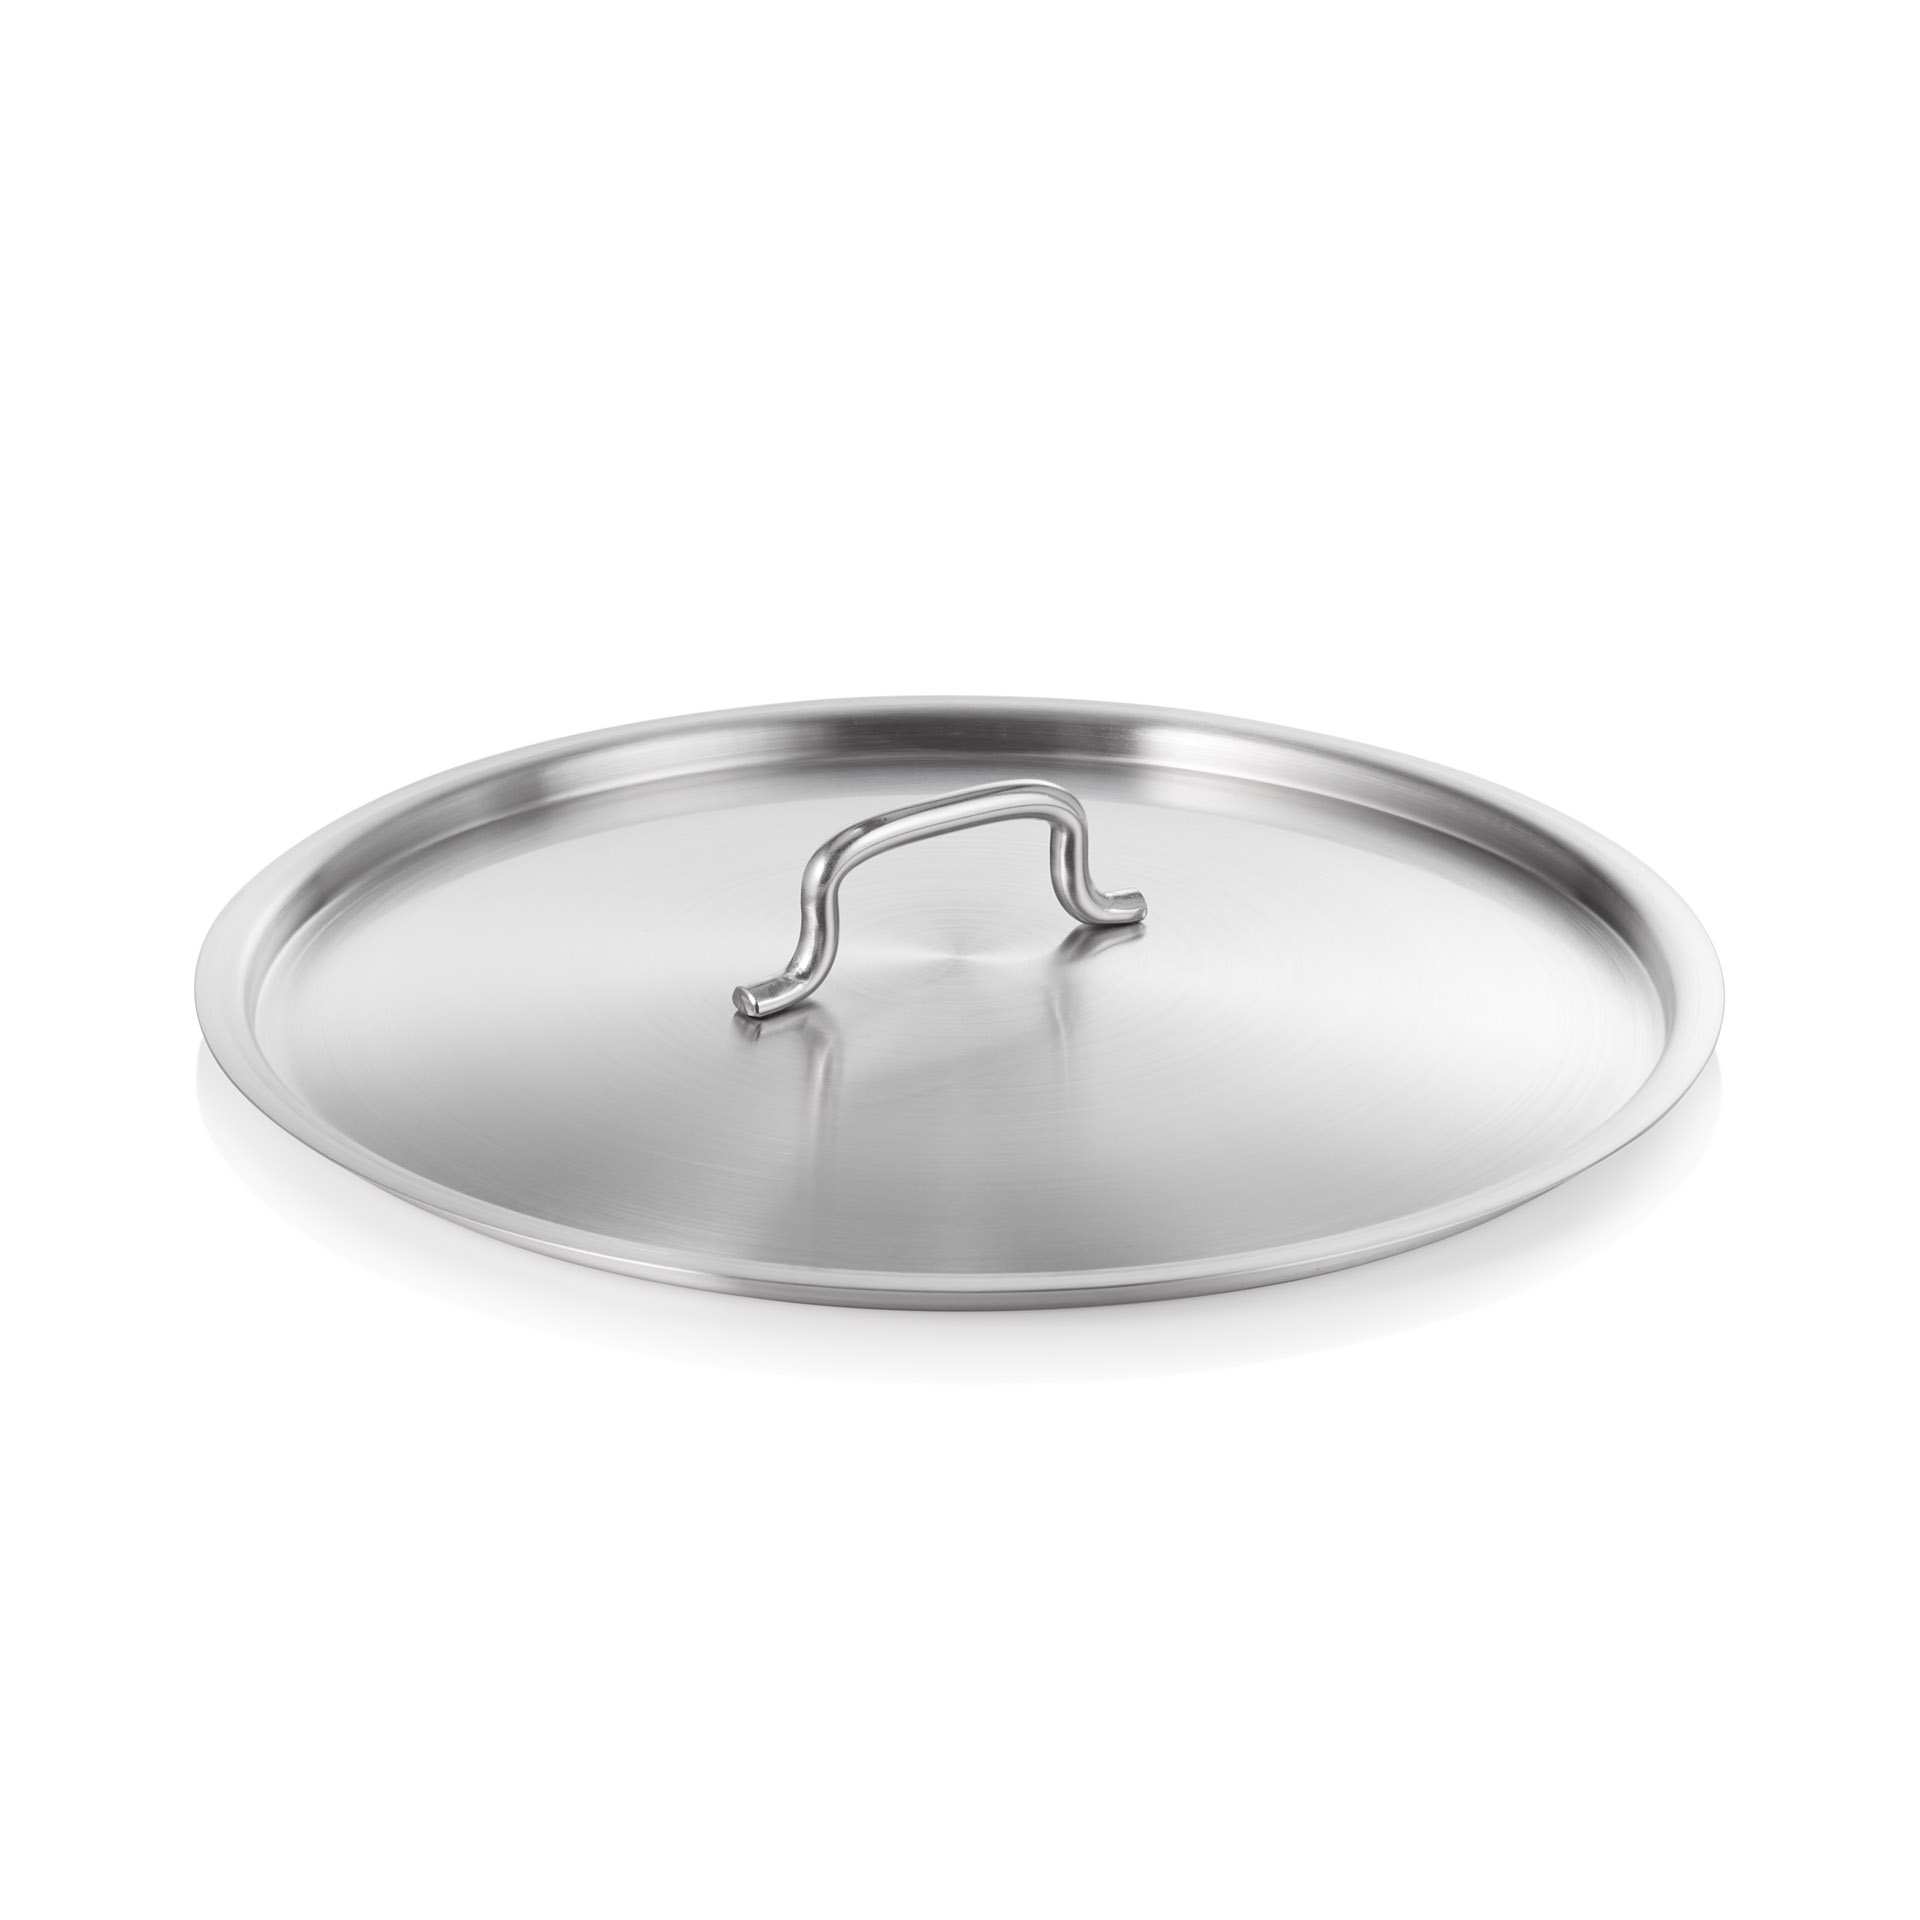 Deckel - Serie Cookware - rund - Ø 28 cm - Chromnickelstahl - 2161280-A